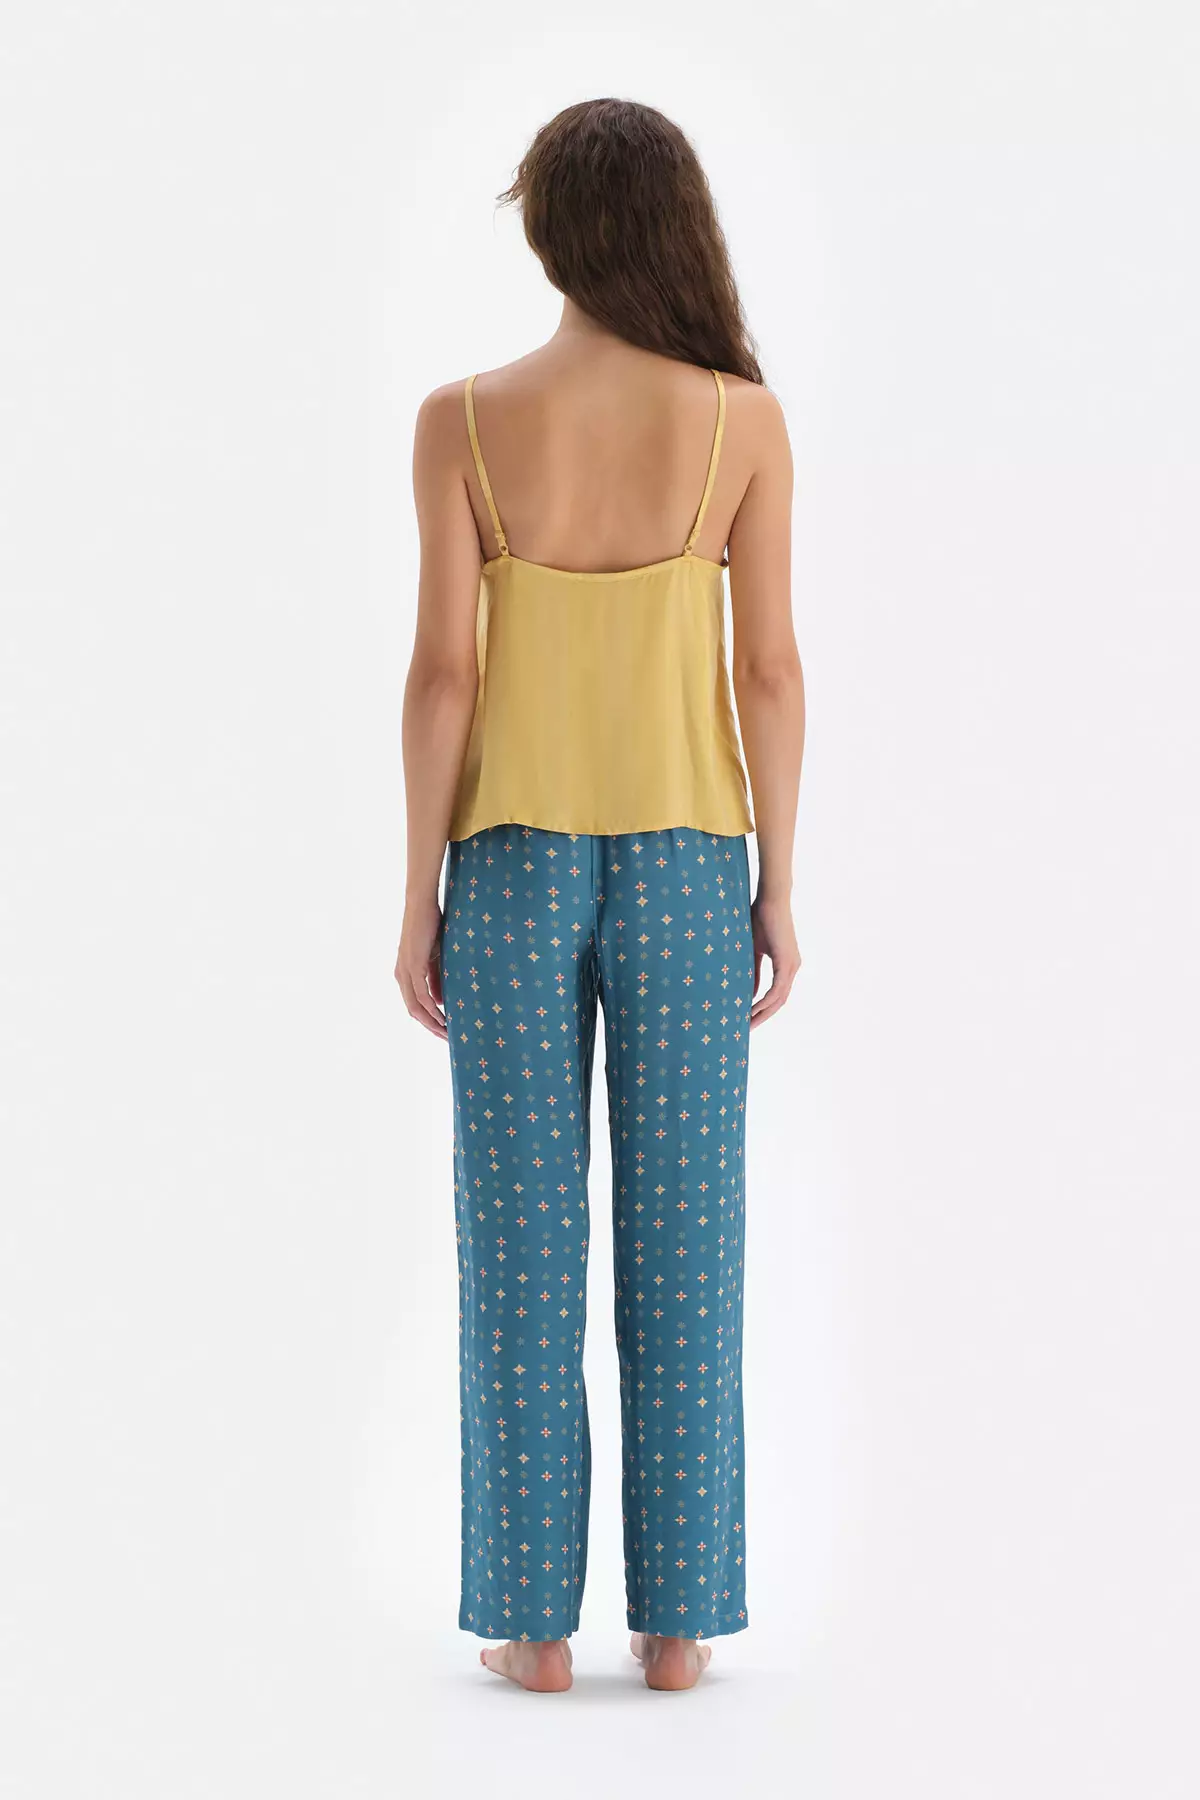 Mustard Pyjama Set, Thin Straps, V-Neck, Geometric Printed, Regular Fit, Sleeveless Homewear And Sleepwear for Women